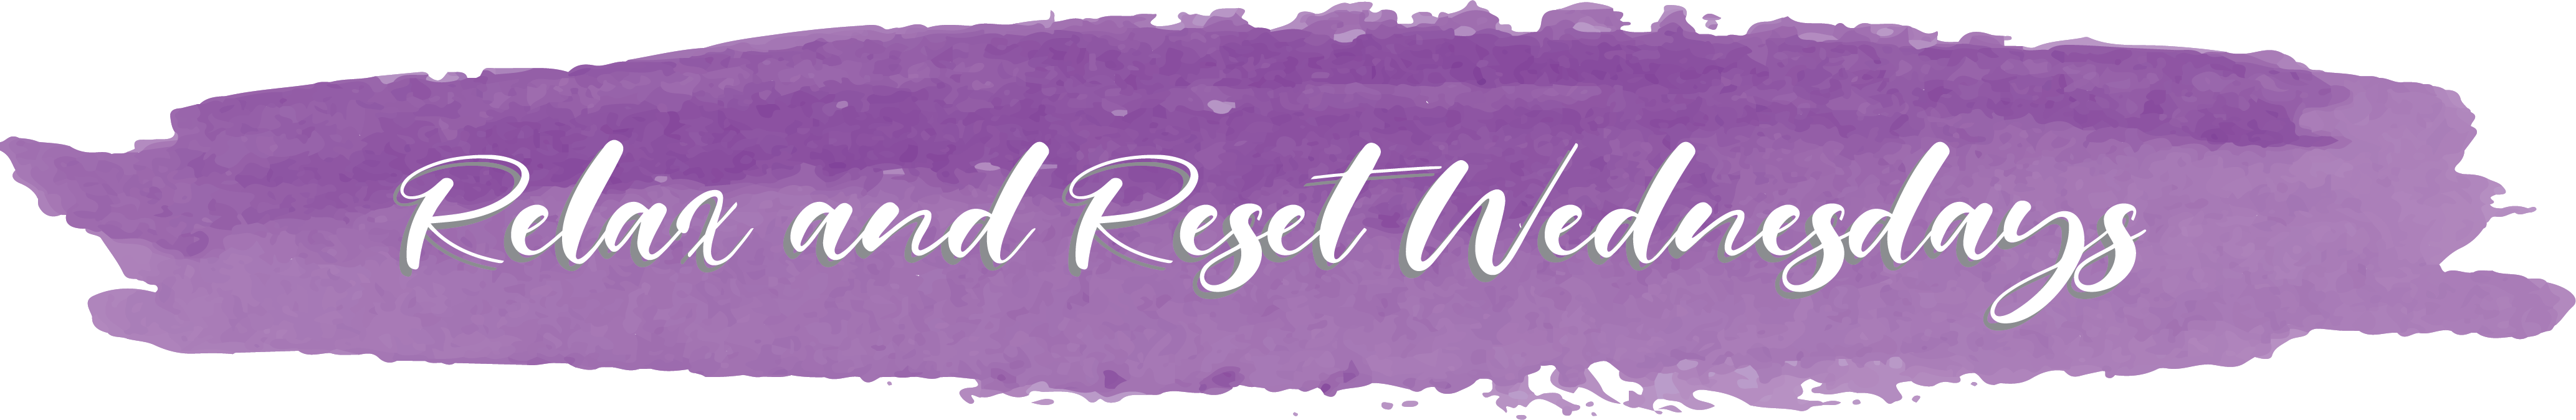 Relax and Reset Wednesdays web header 2019